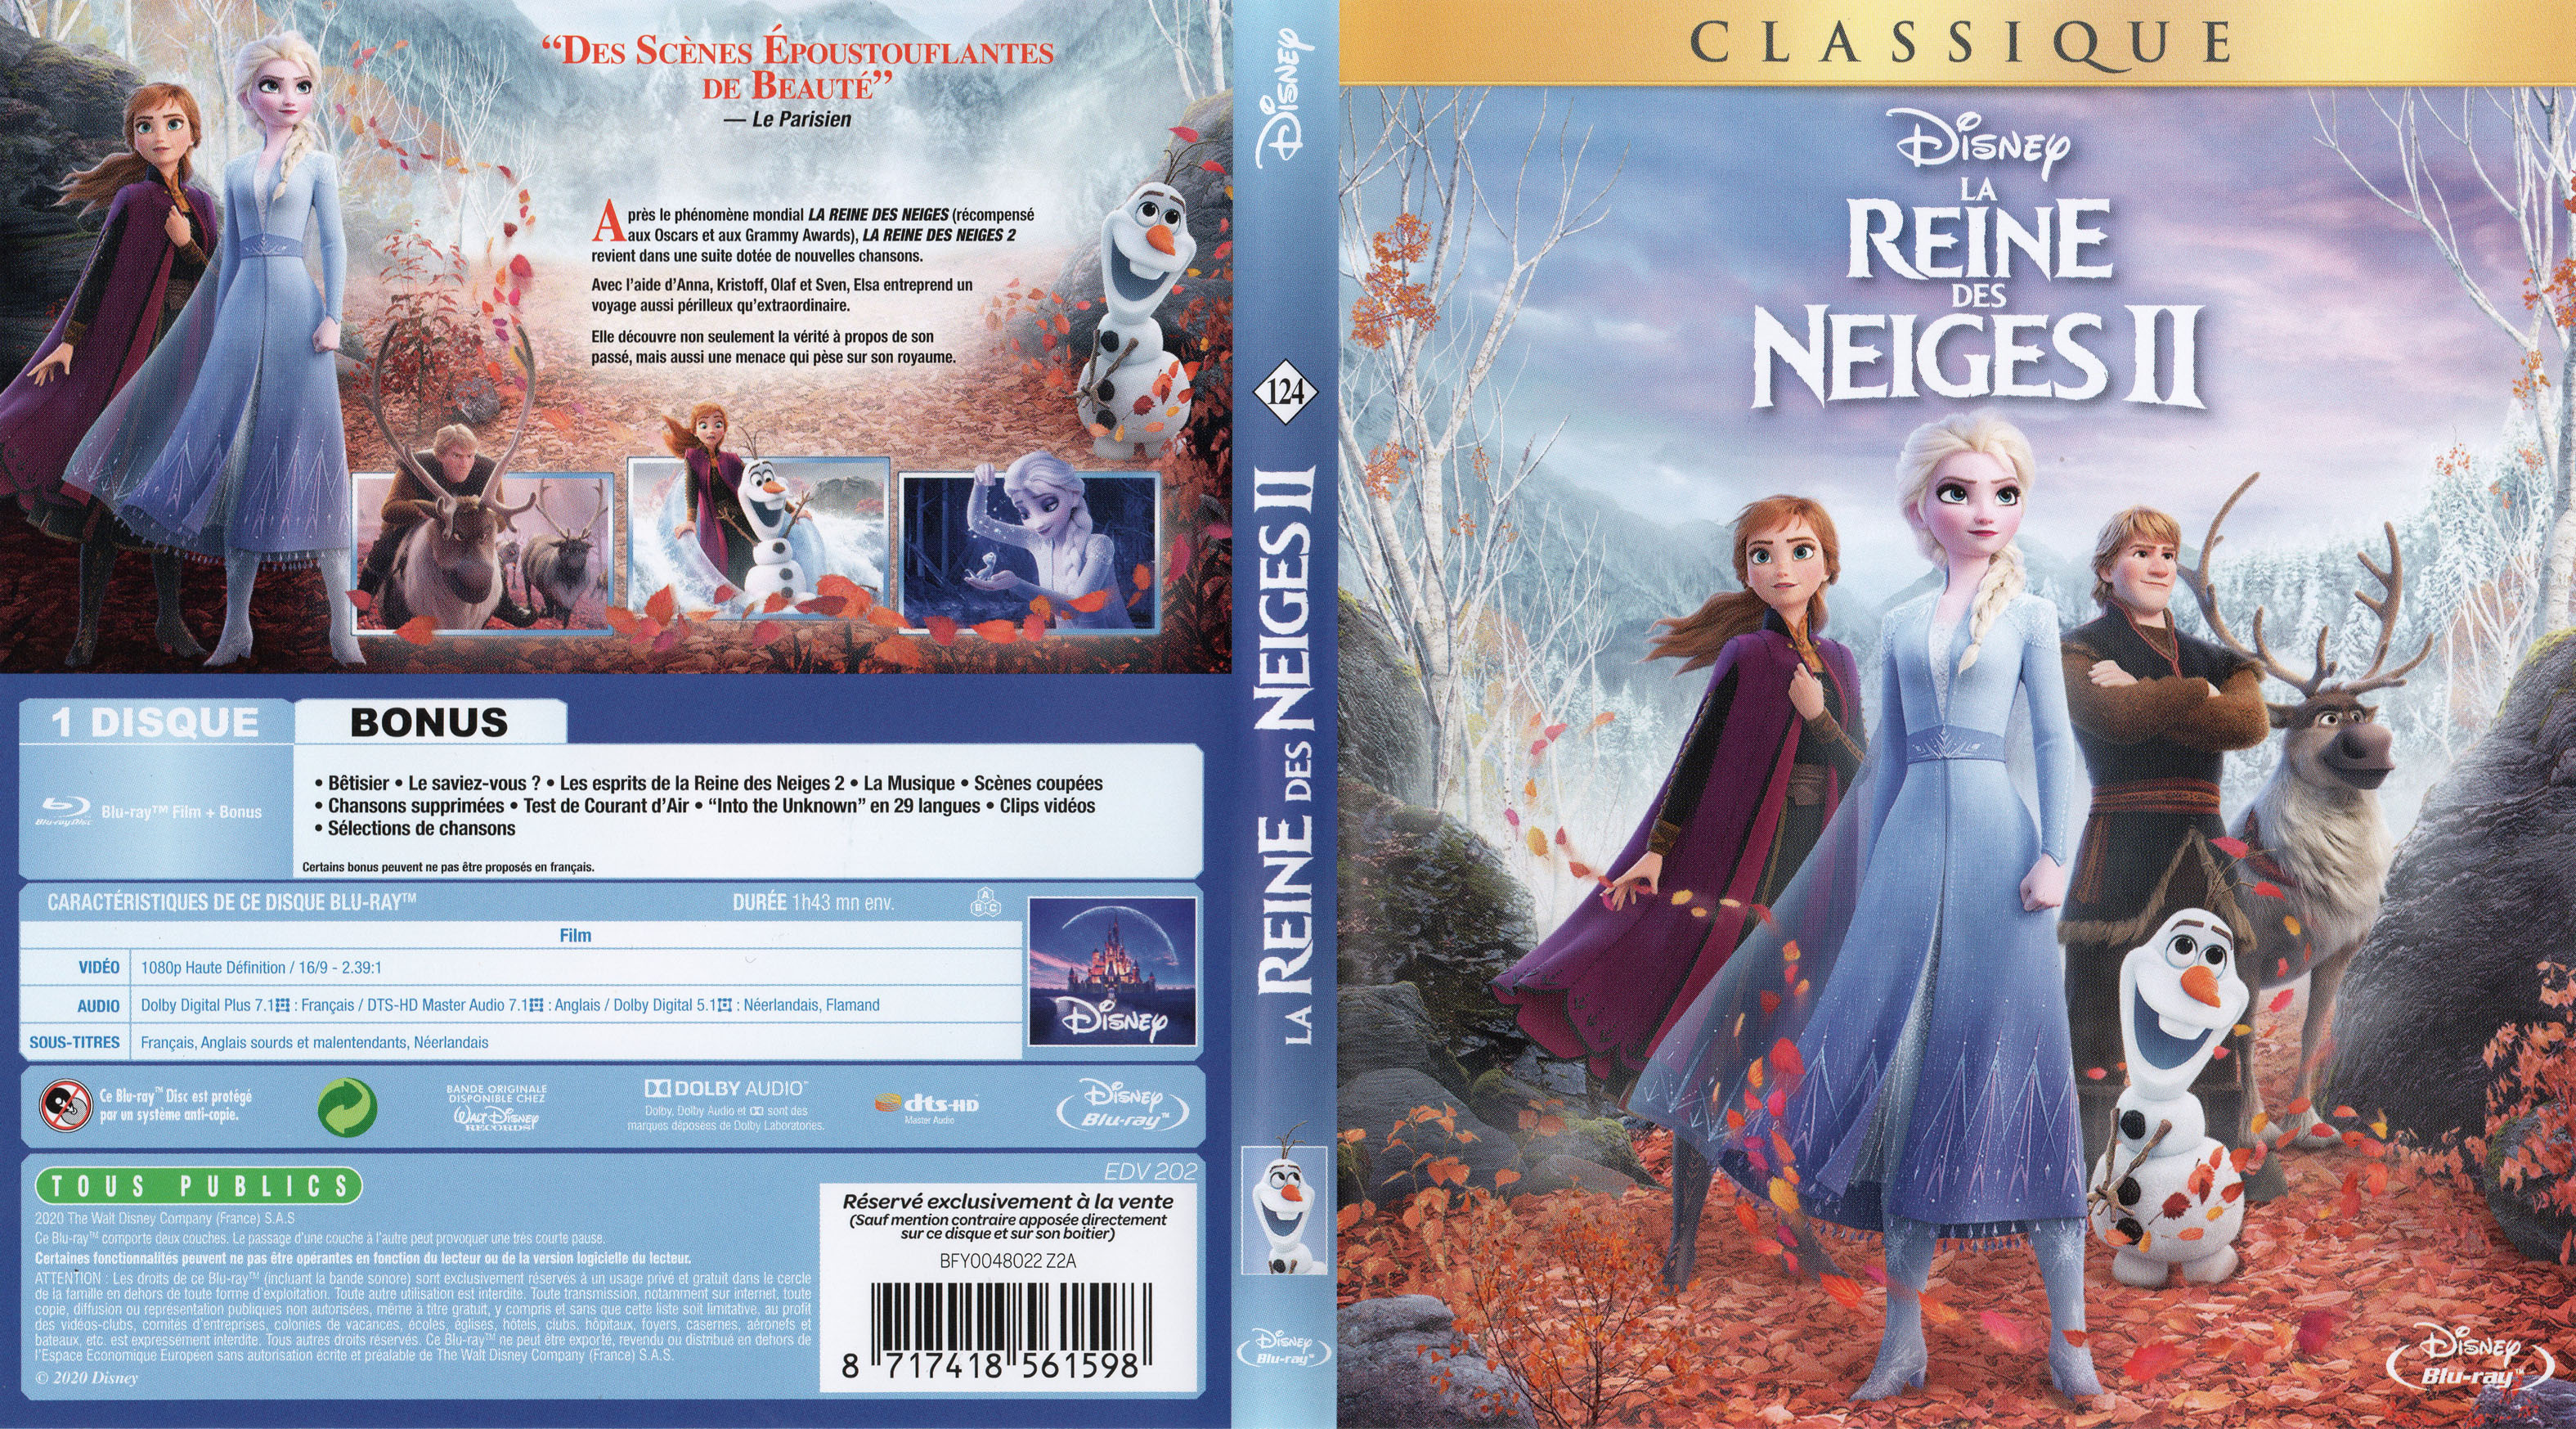 Jaquette DVD La reine des neiges II (BLU-RAY)